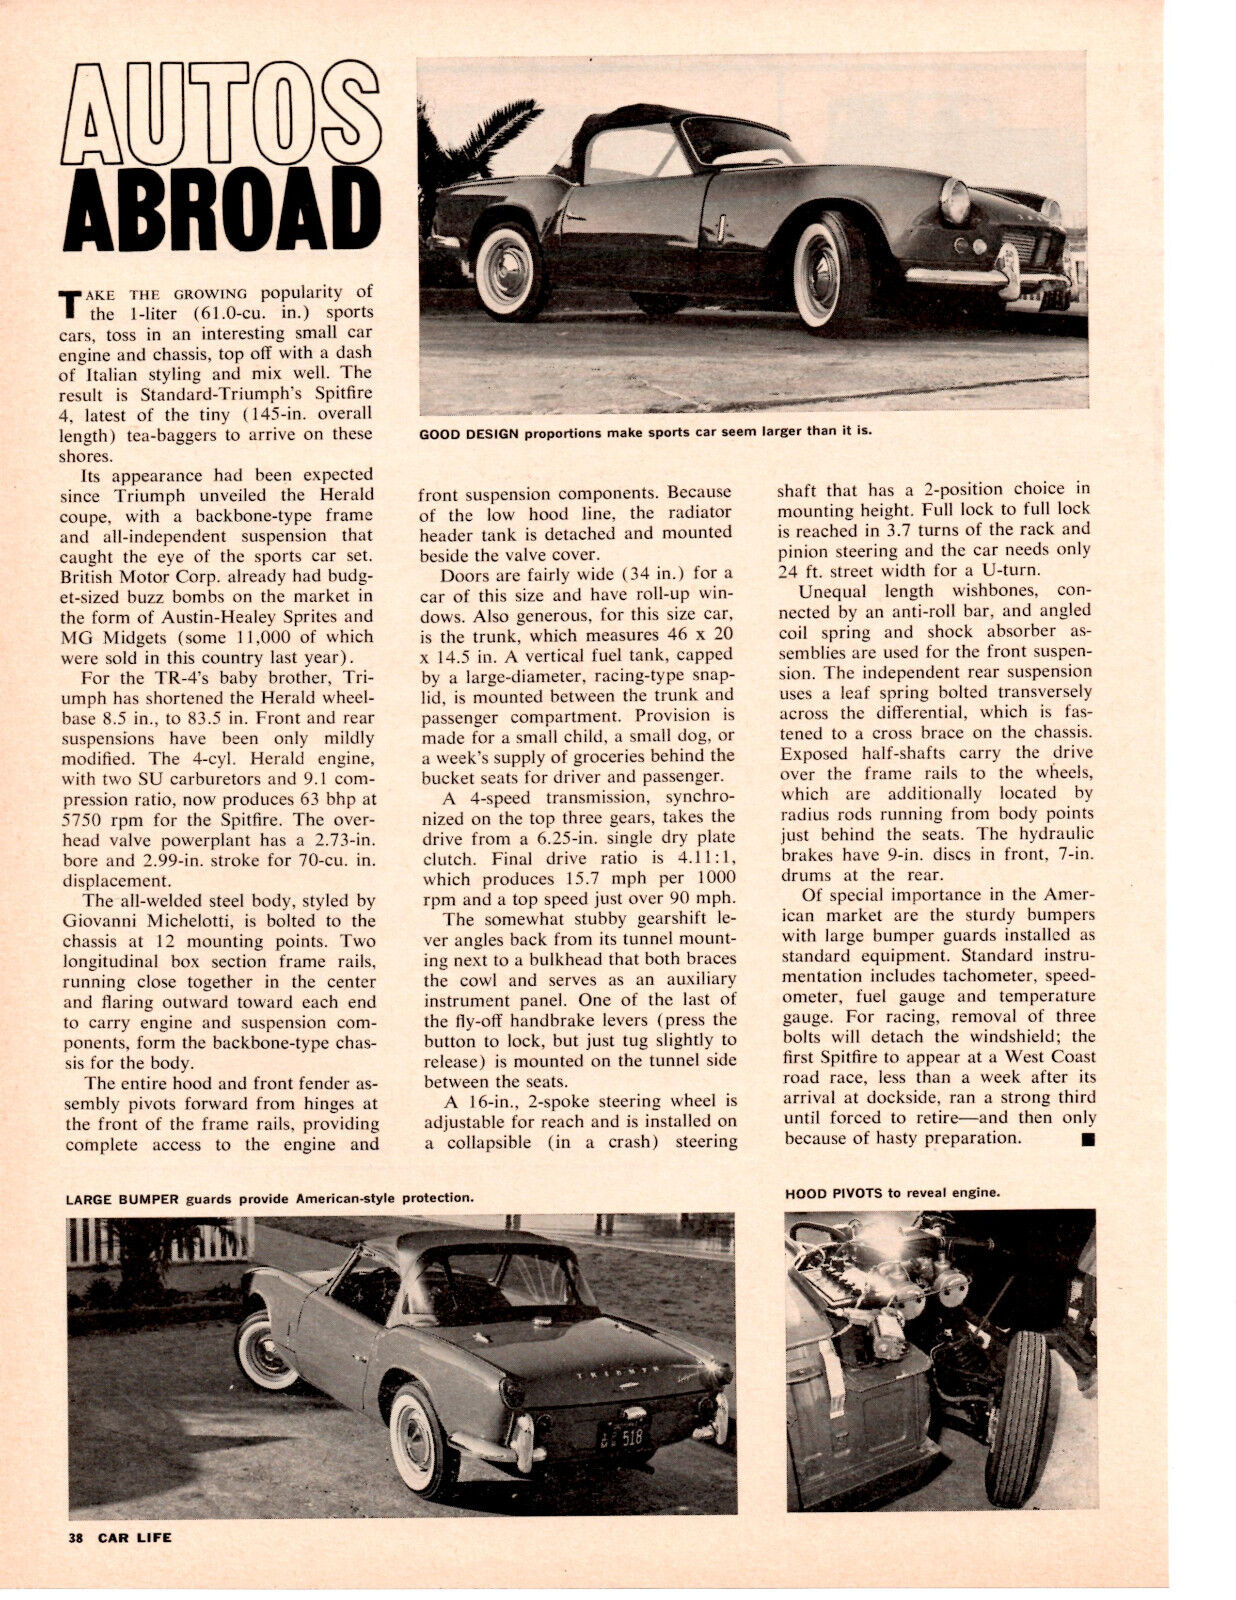 1963 Triumph Spitfire  ~  Original New Car Preview Article / Ad